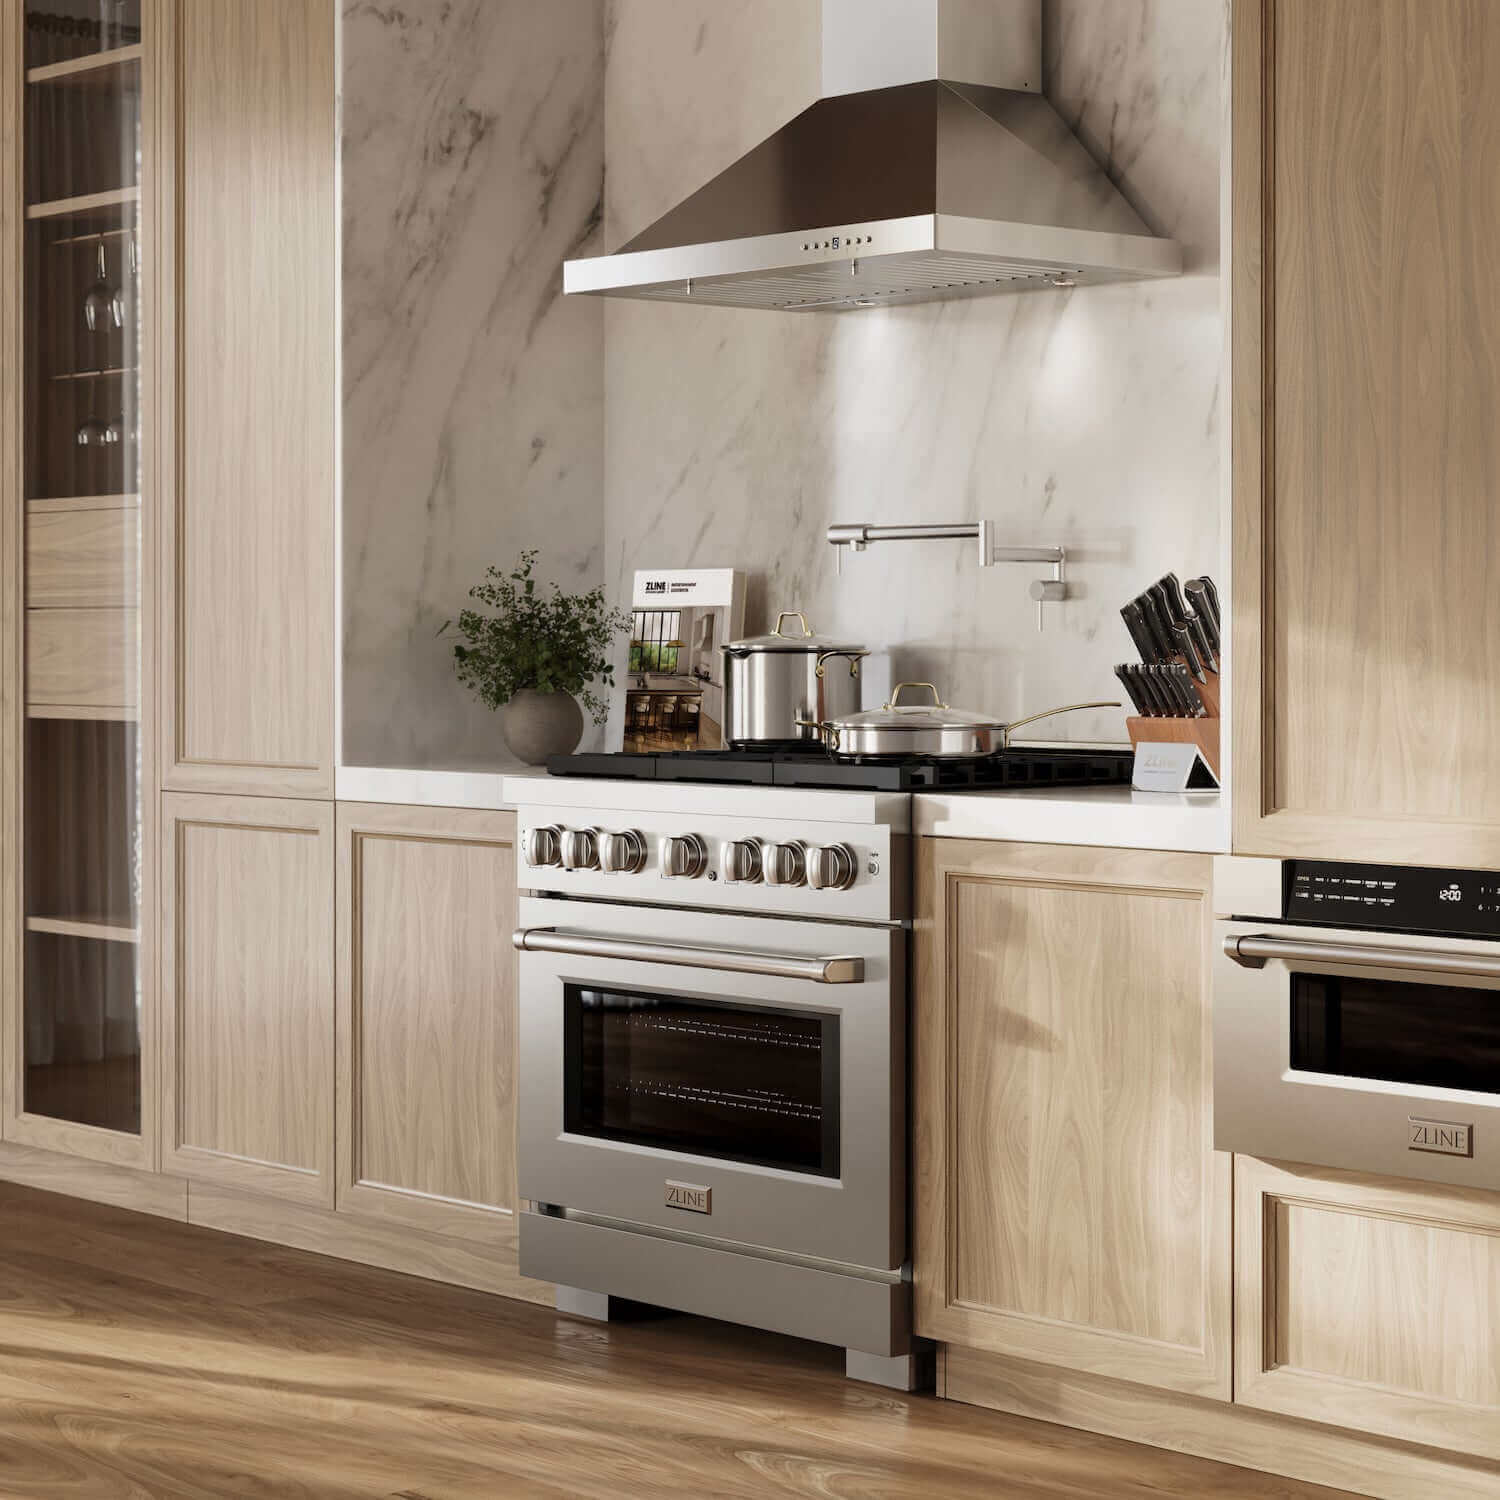 ZLINE 36-inch stainless steel gas range in luxury kitchen side angle.